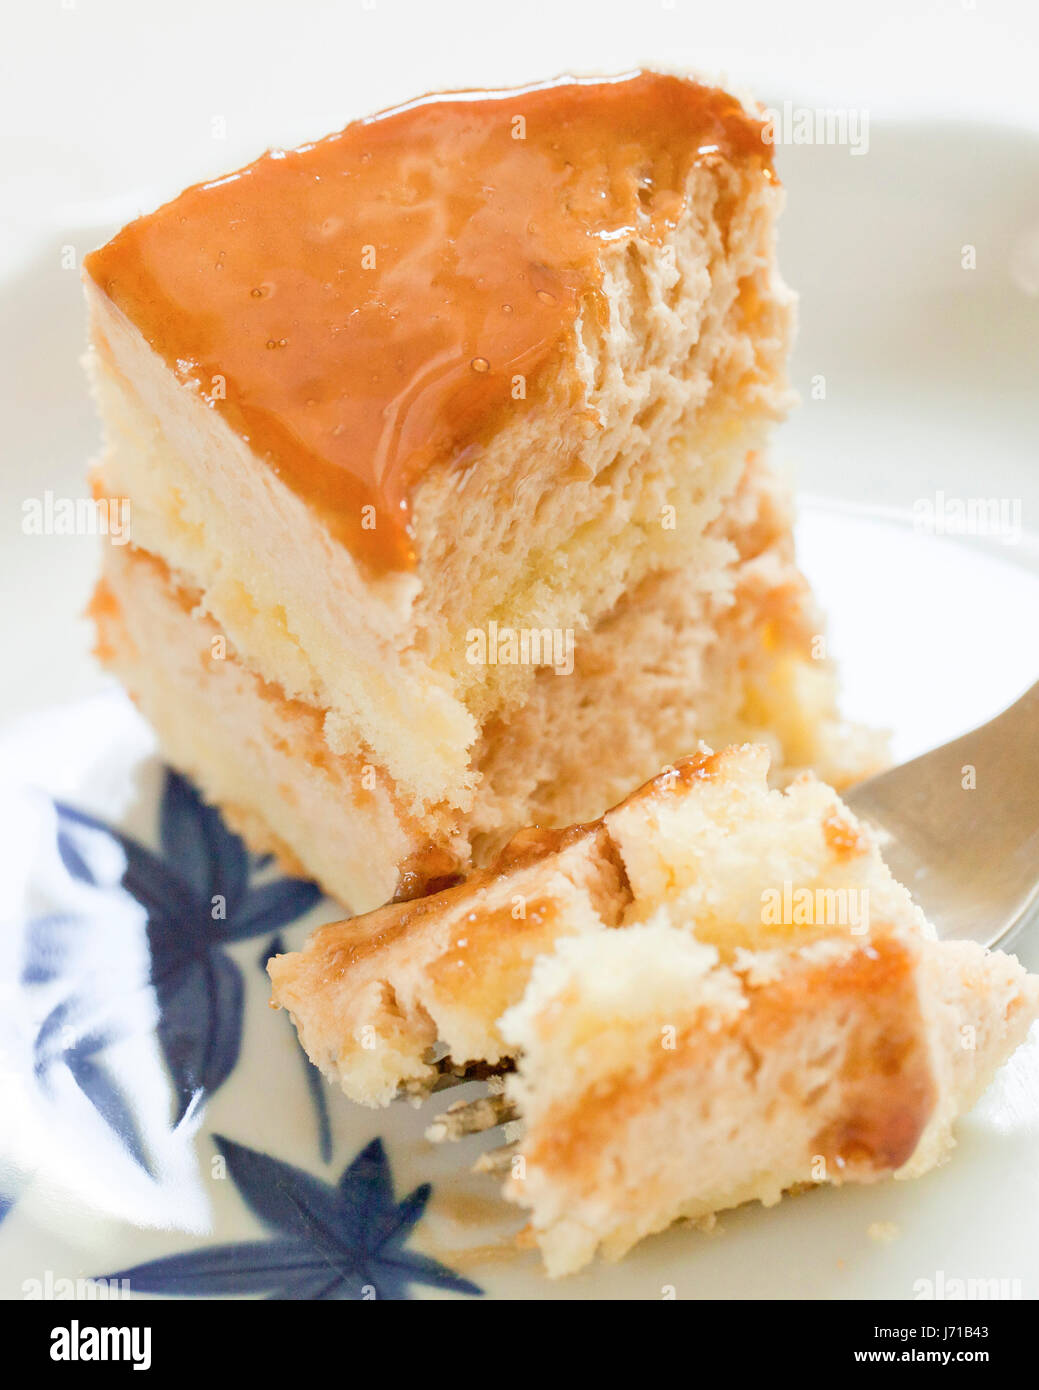 Half-eaten slice of layered cheesecake on dish - USA Stock Photo